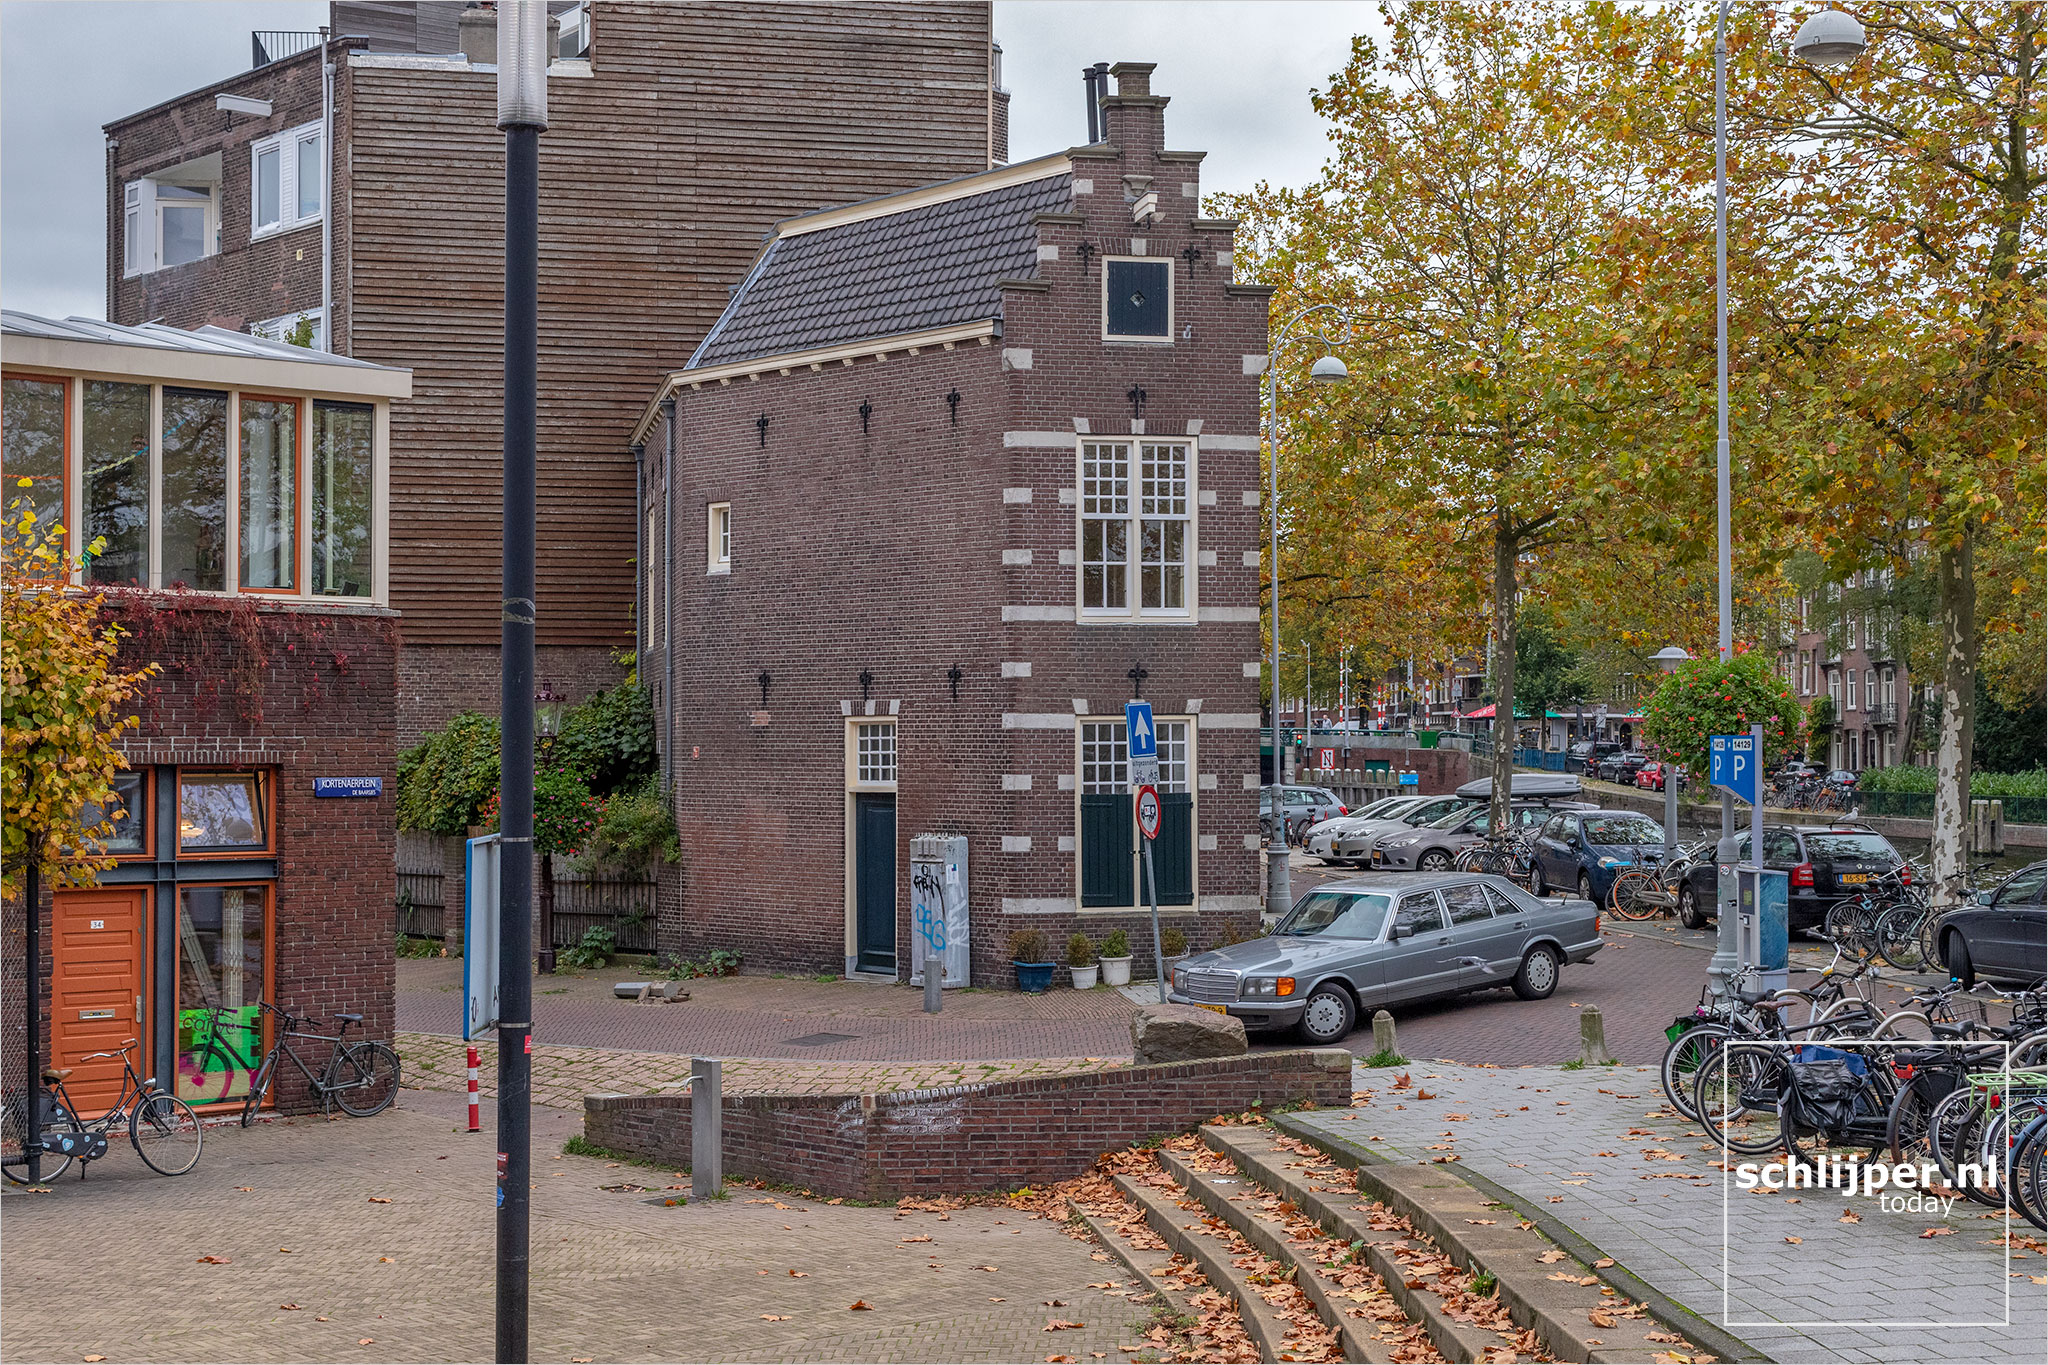 The Netherlands, Amsterdam, 27 oktober 2021